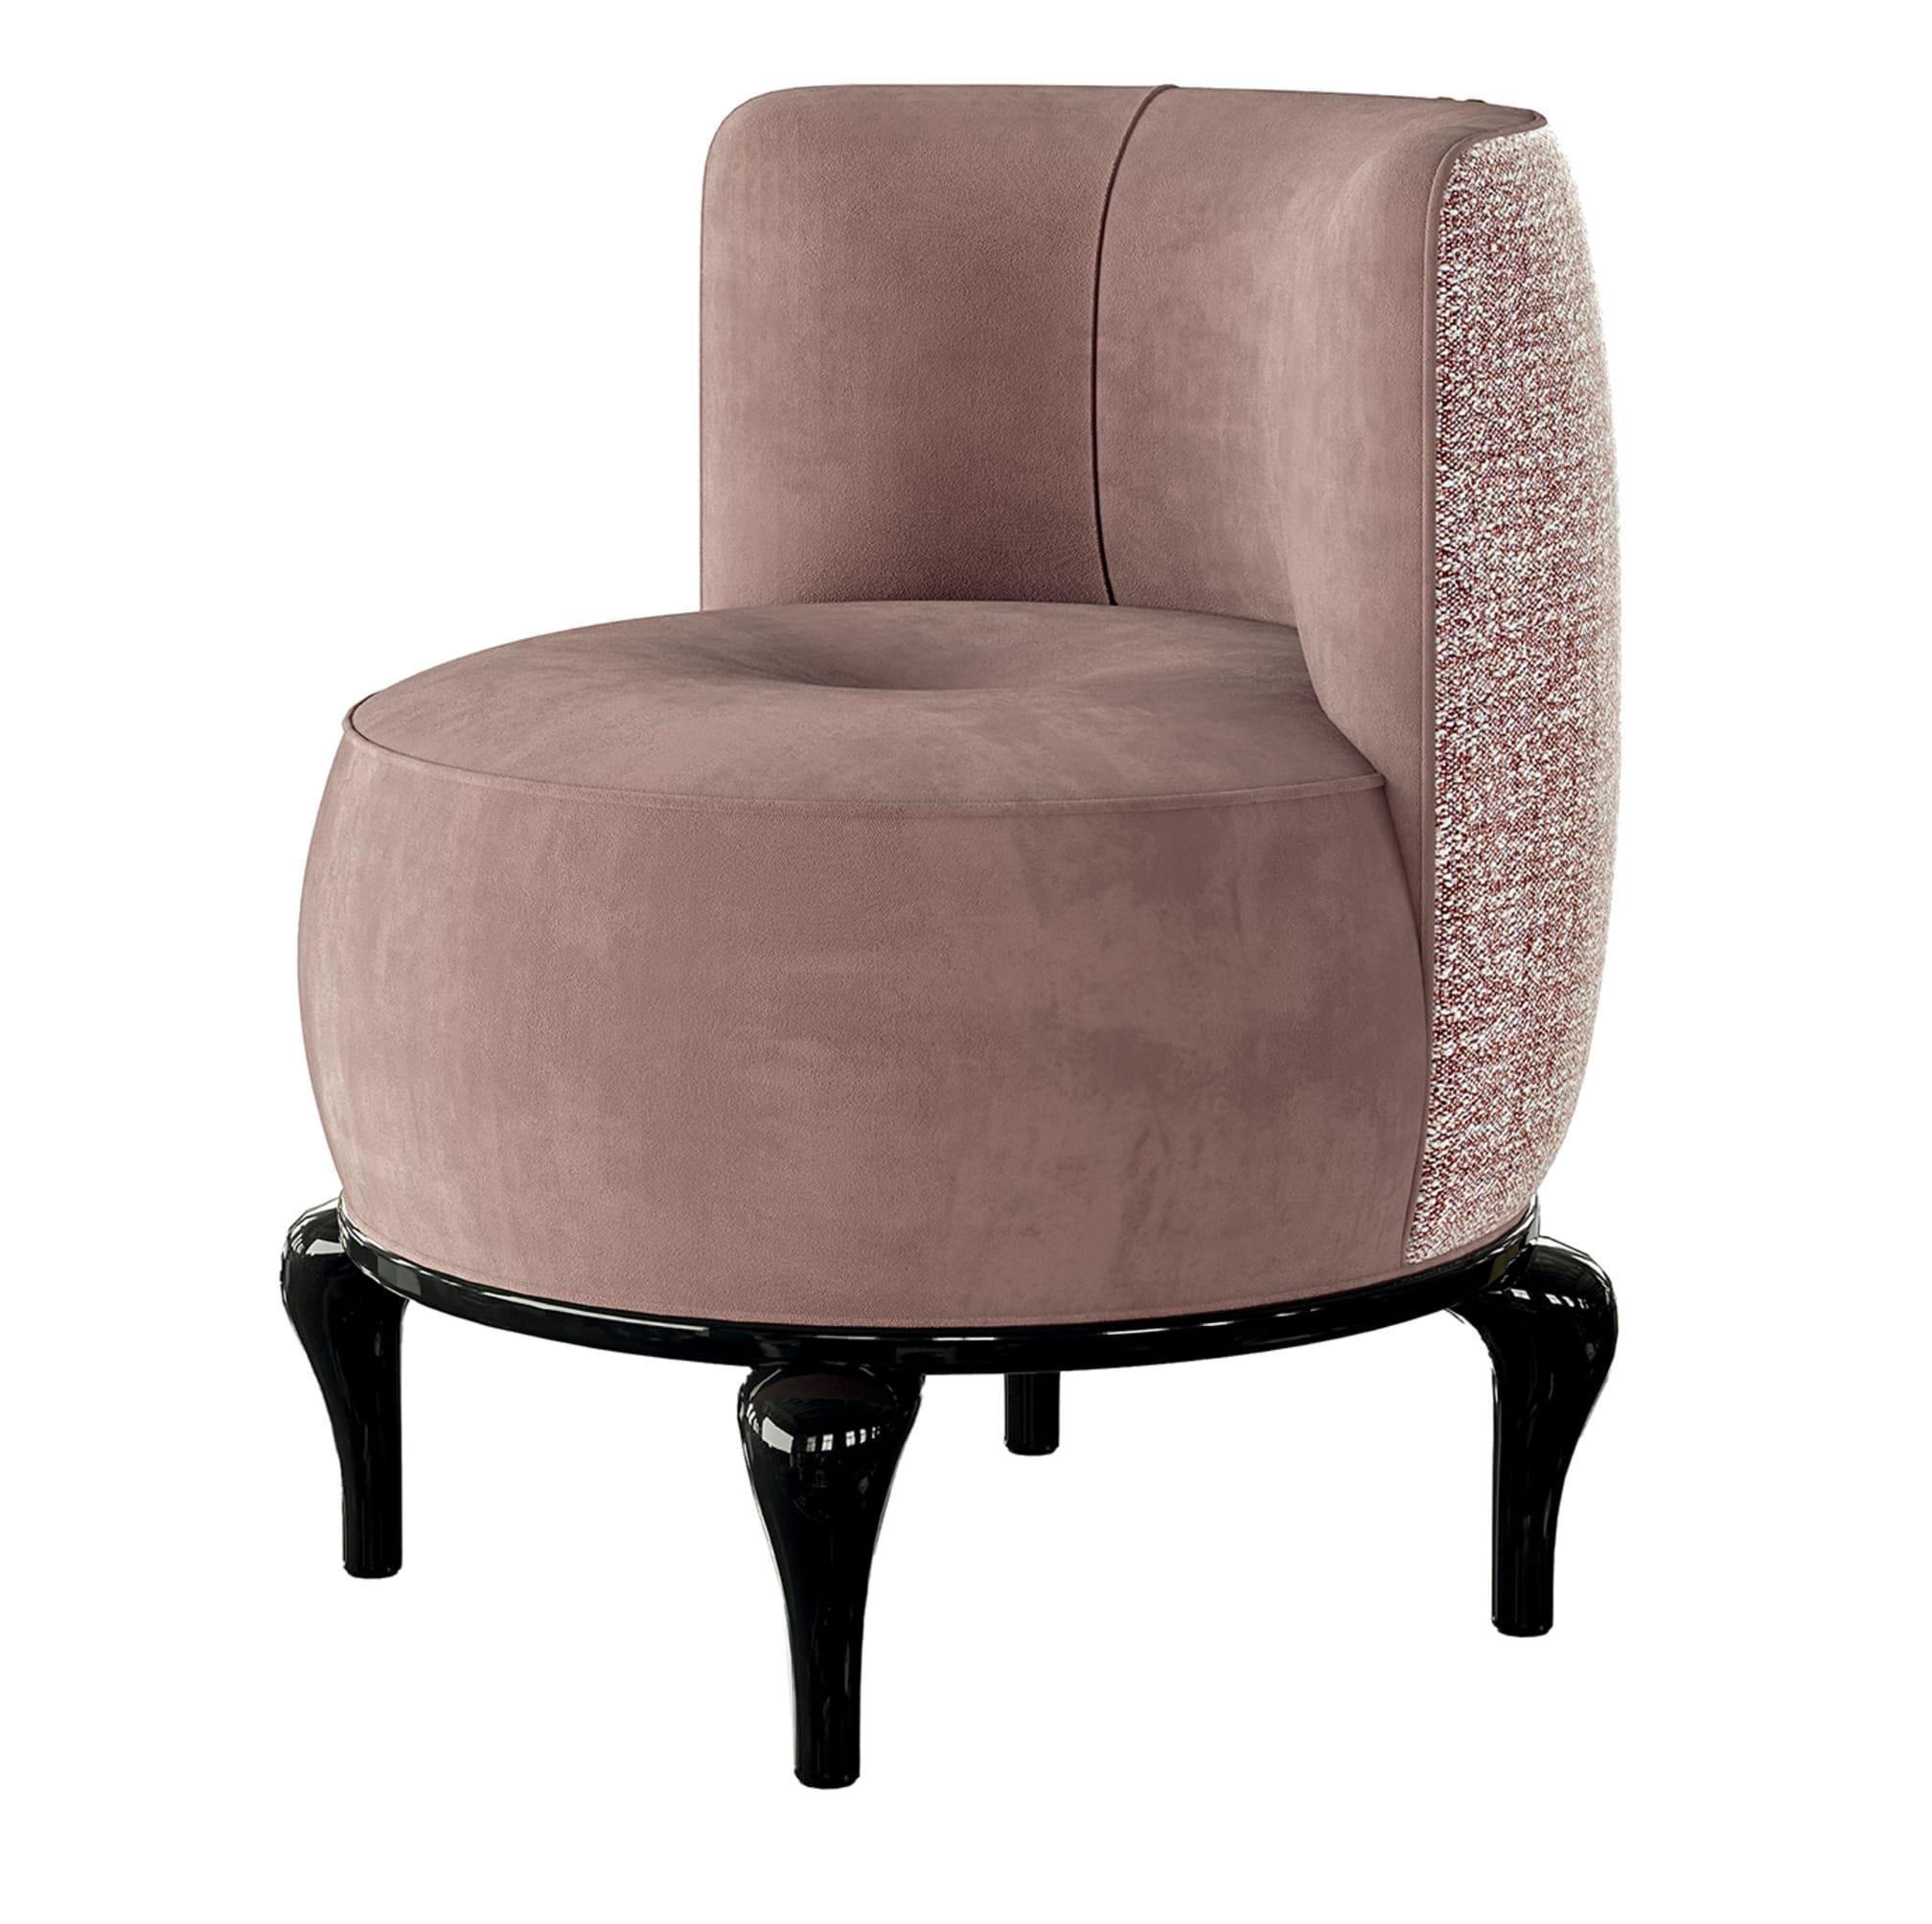 Circular Lounge Chair